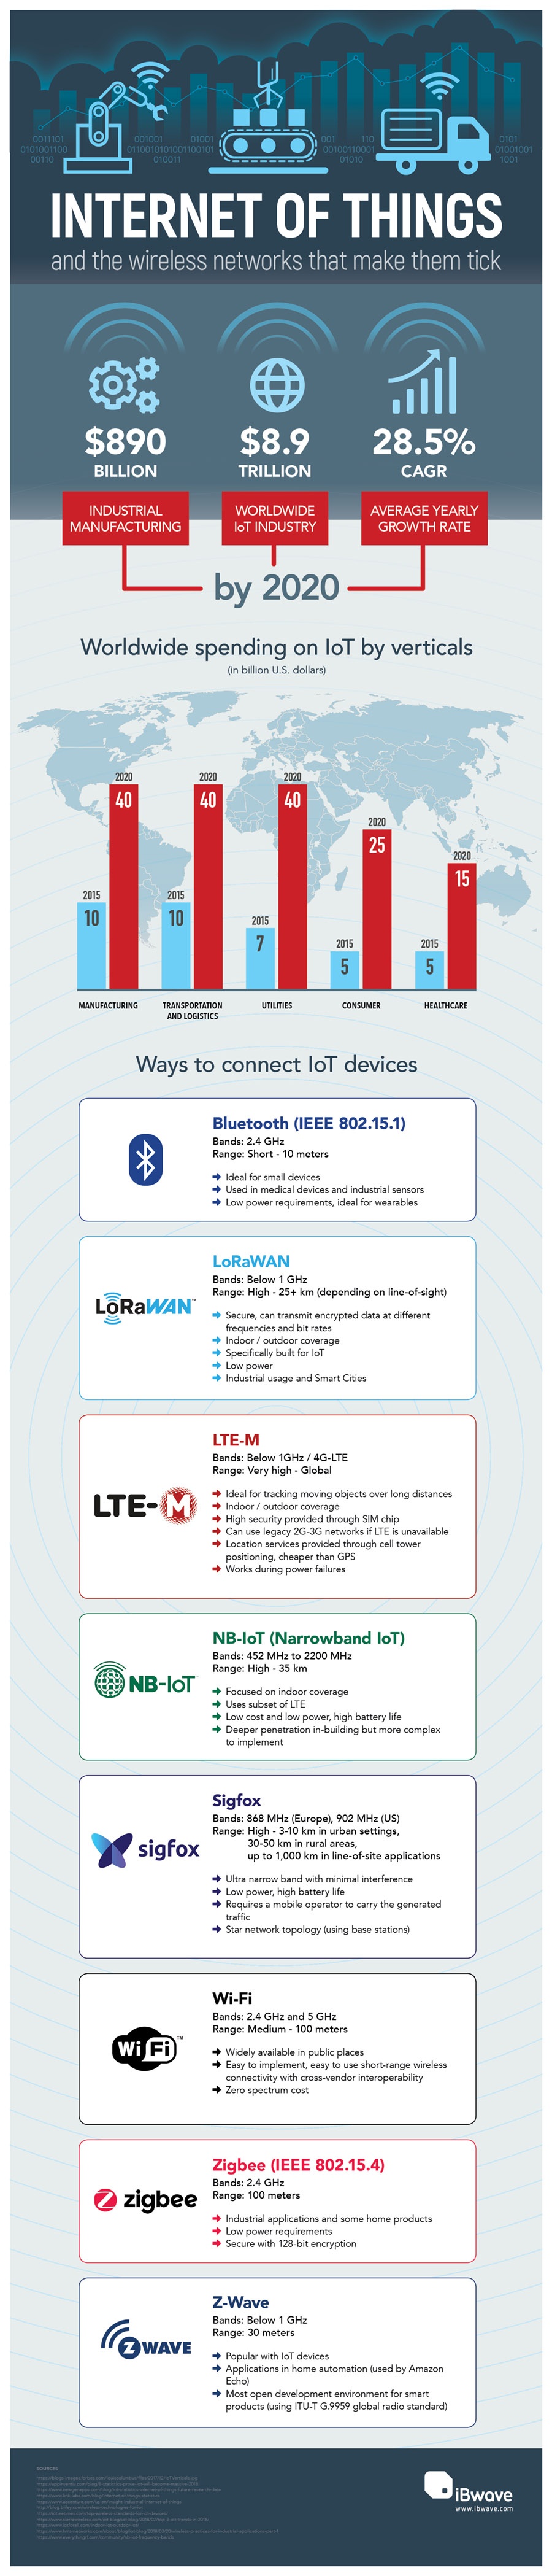 iBwave-IoT-infographic